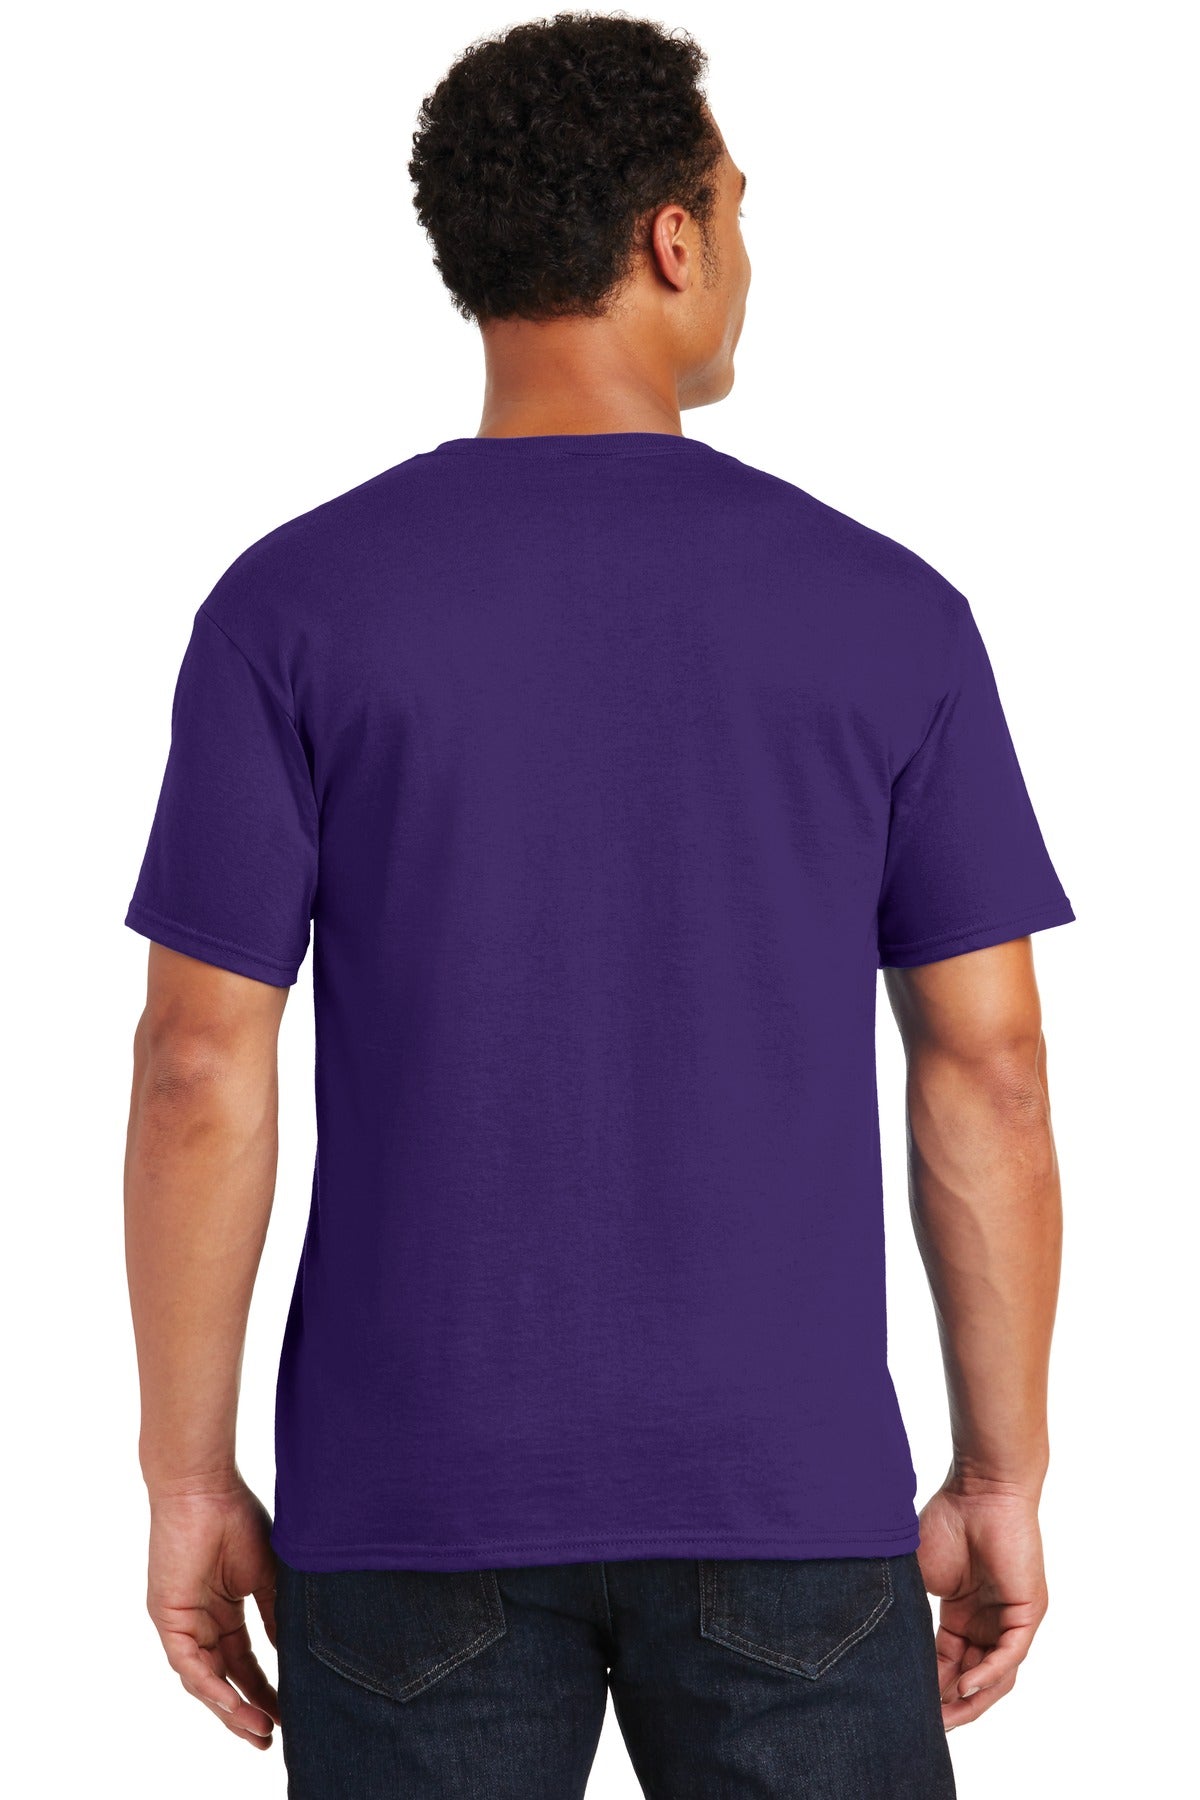 JERZEES® - Dri-Power® 50/50 Cotton/Poly T-Shirt. 29M [Deep Purple] - DFW Impression